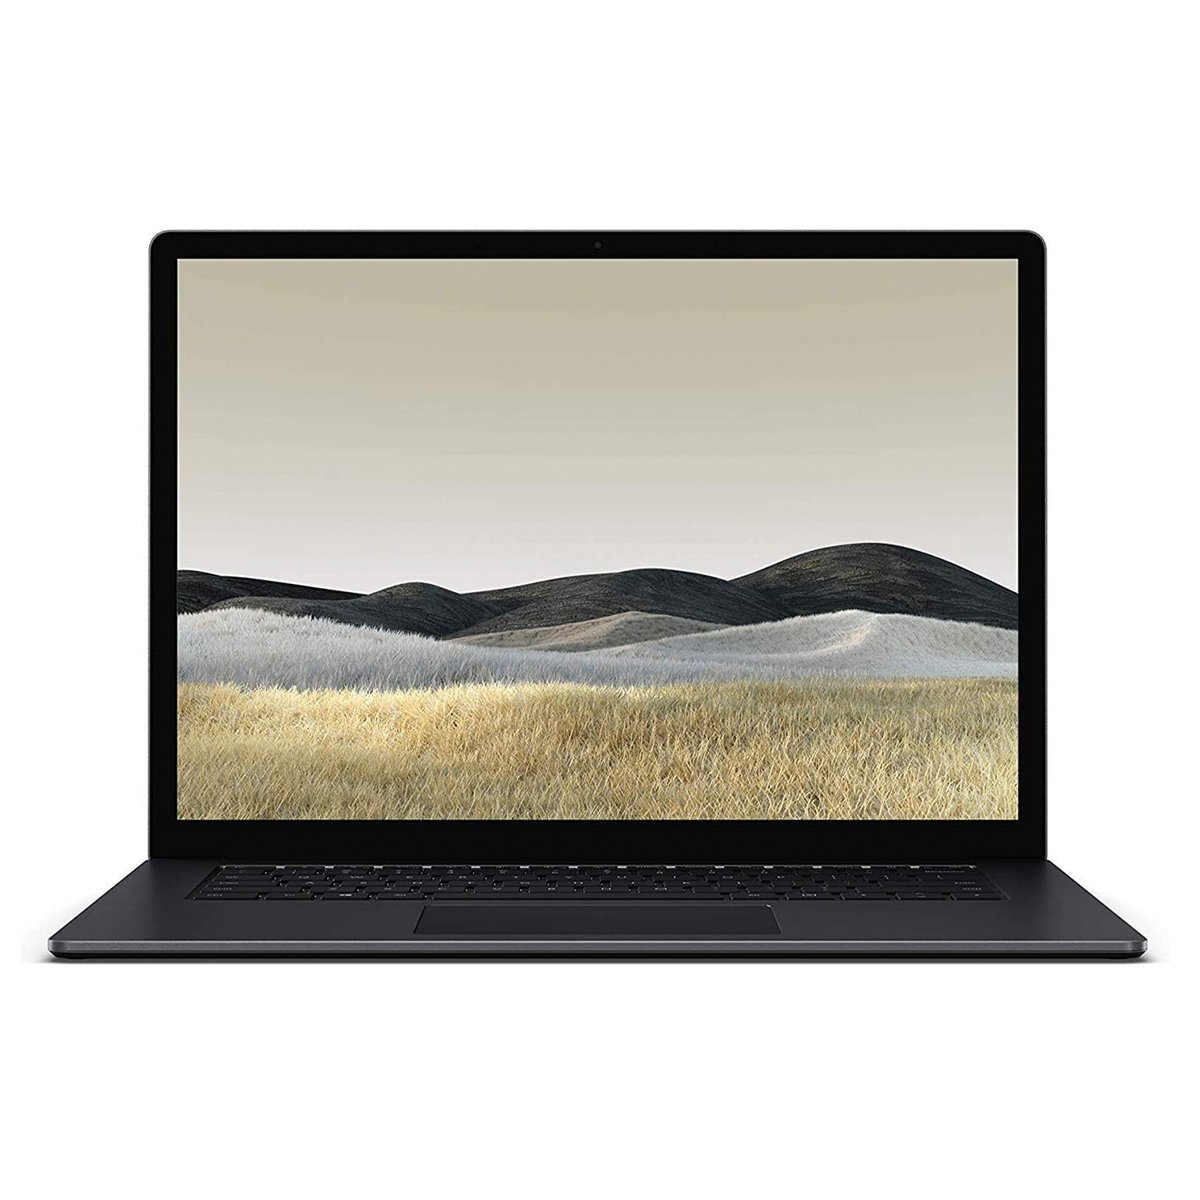 Microsoft Surface Laptop 3 [V9R-00034] Touchscreen Laptop, AMD Ryzen R5-3580U, 15 Inch, 256GB, 16GB RAM, AMD Radeon Vega 9 Graphics, Windows10,Black